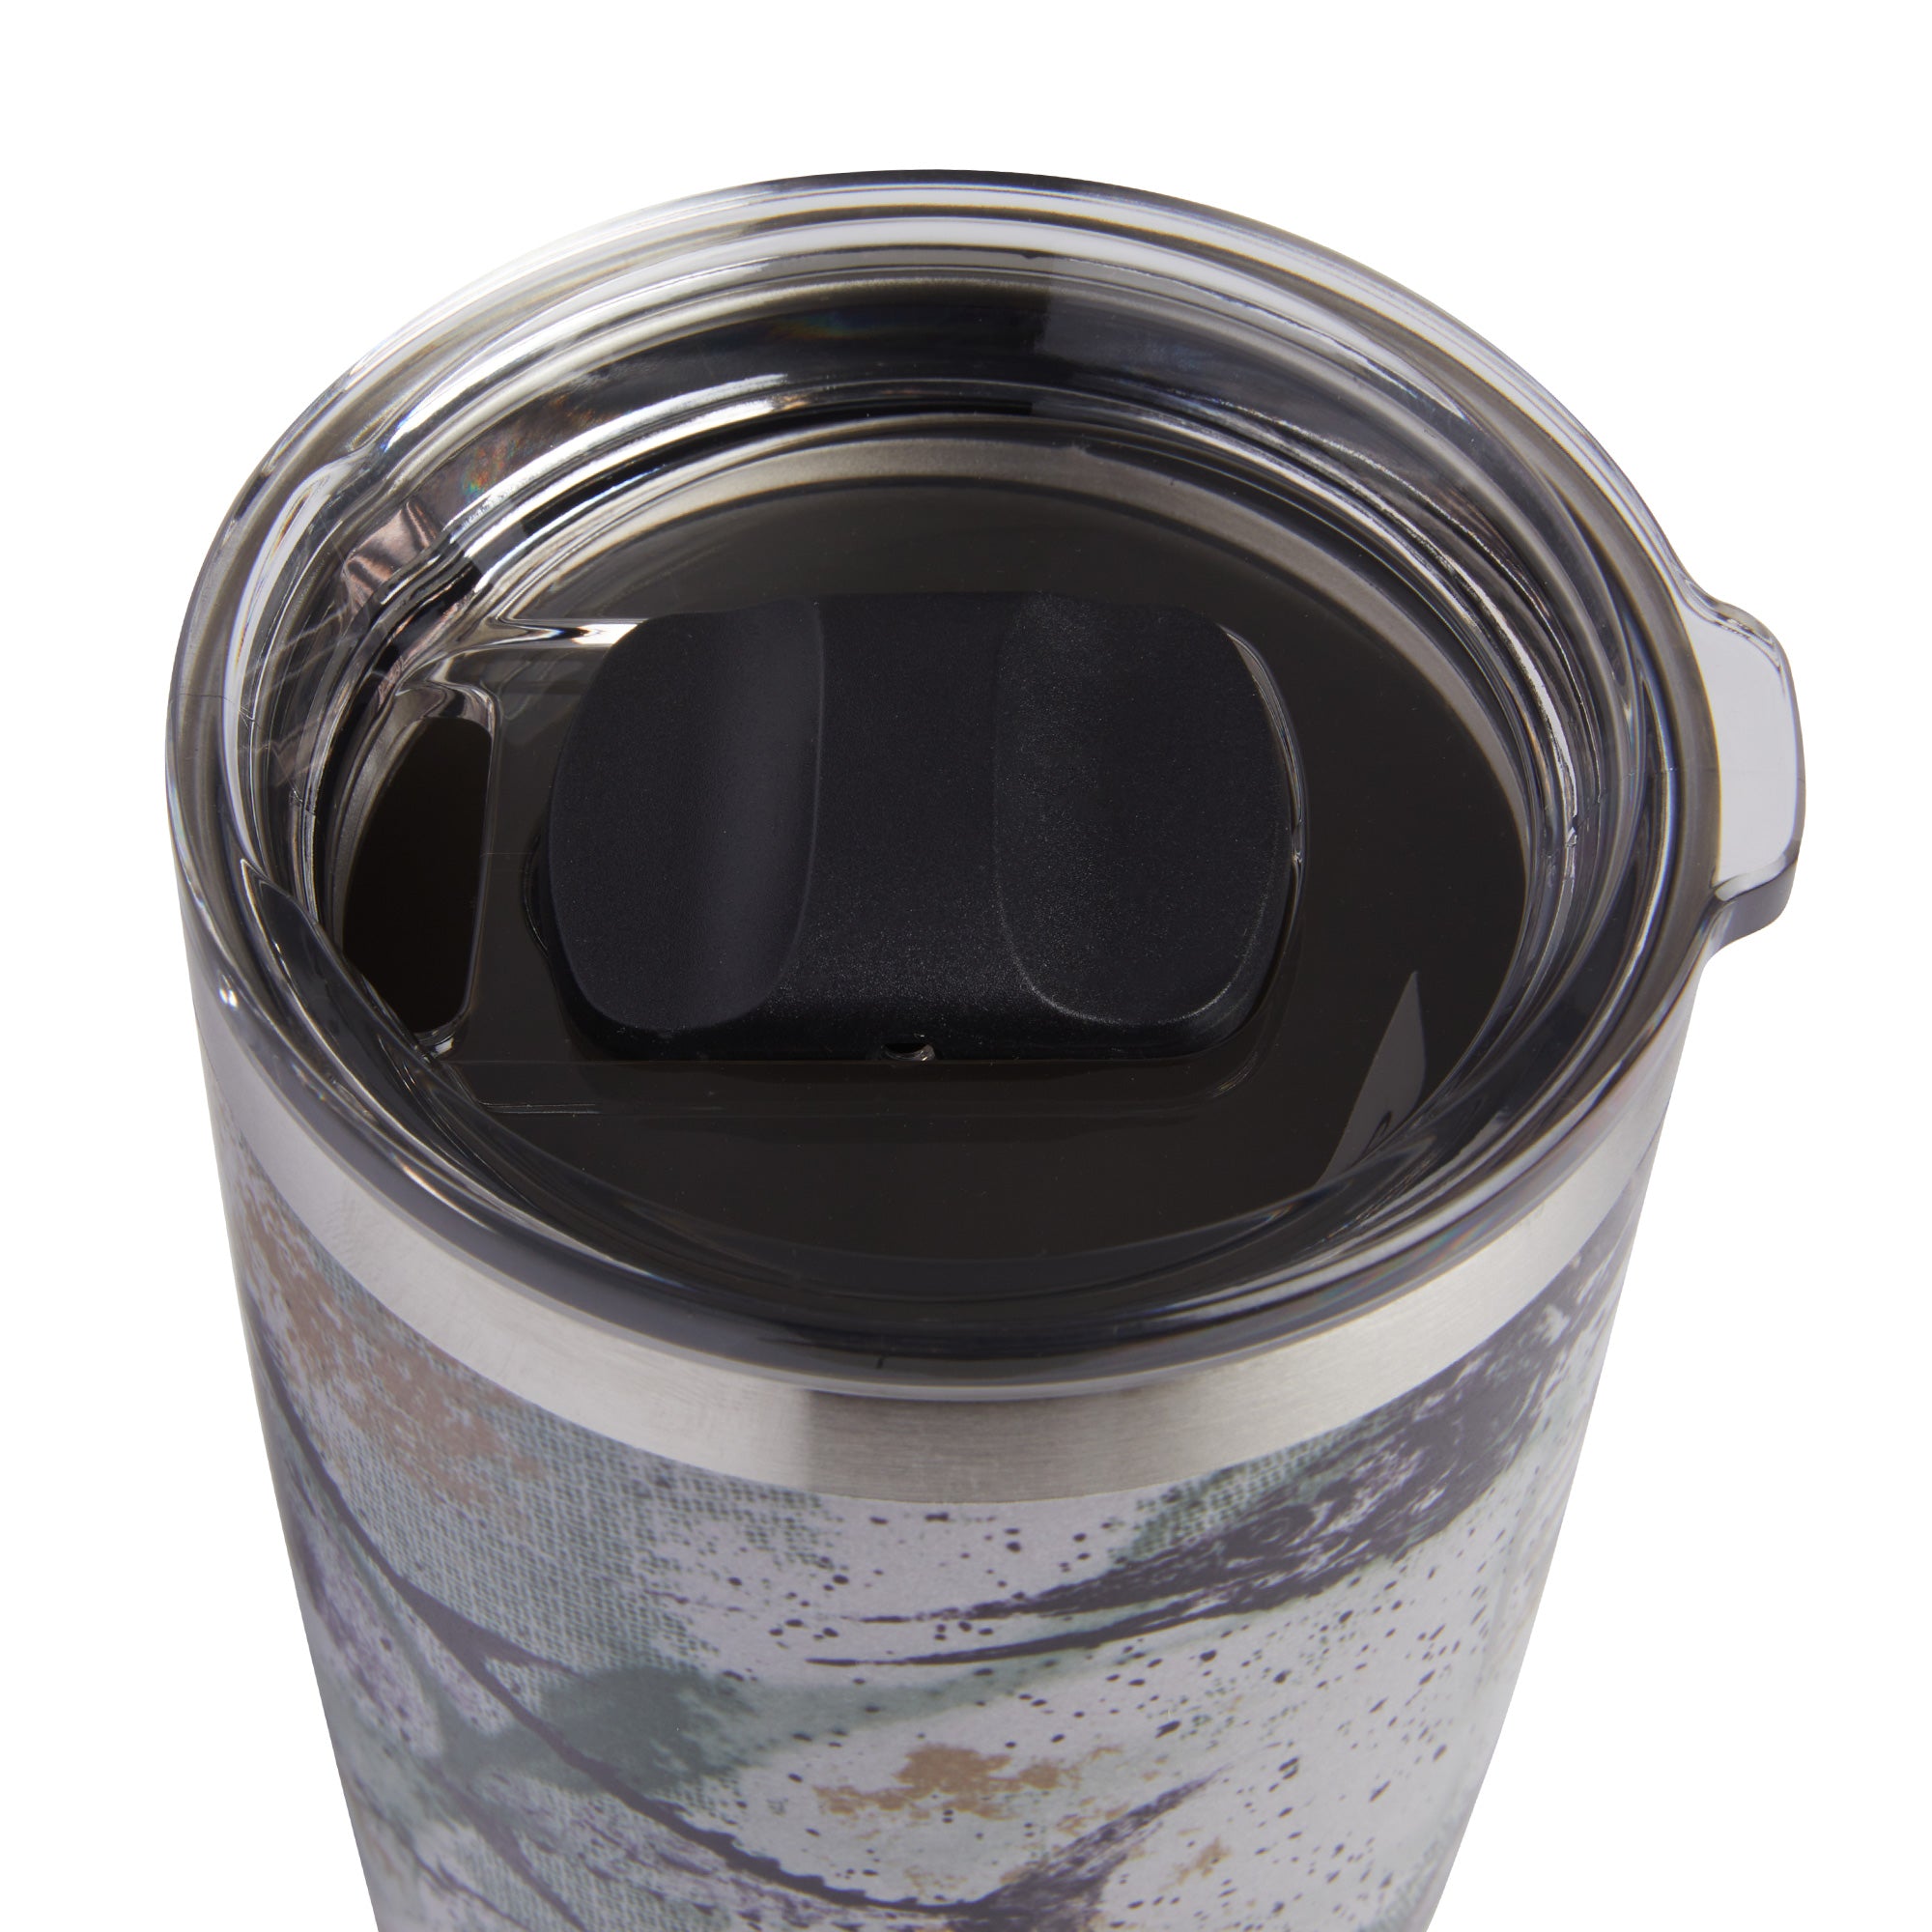 Contigo SNAPSEAL 20-oz. Vacuum-Insulated Stainless Steel Travel Mug